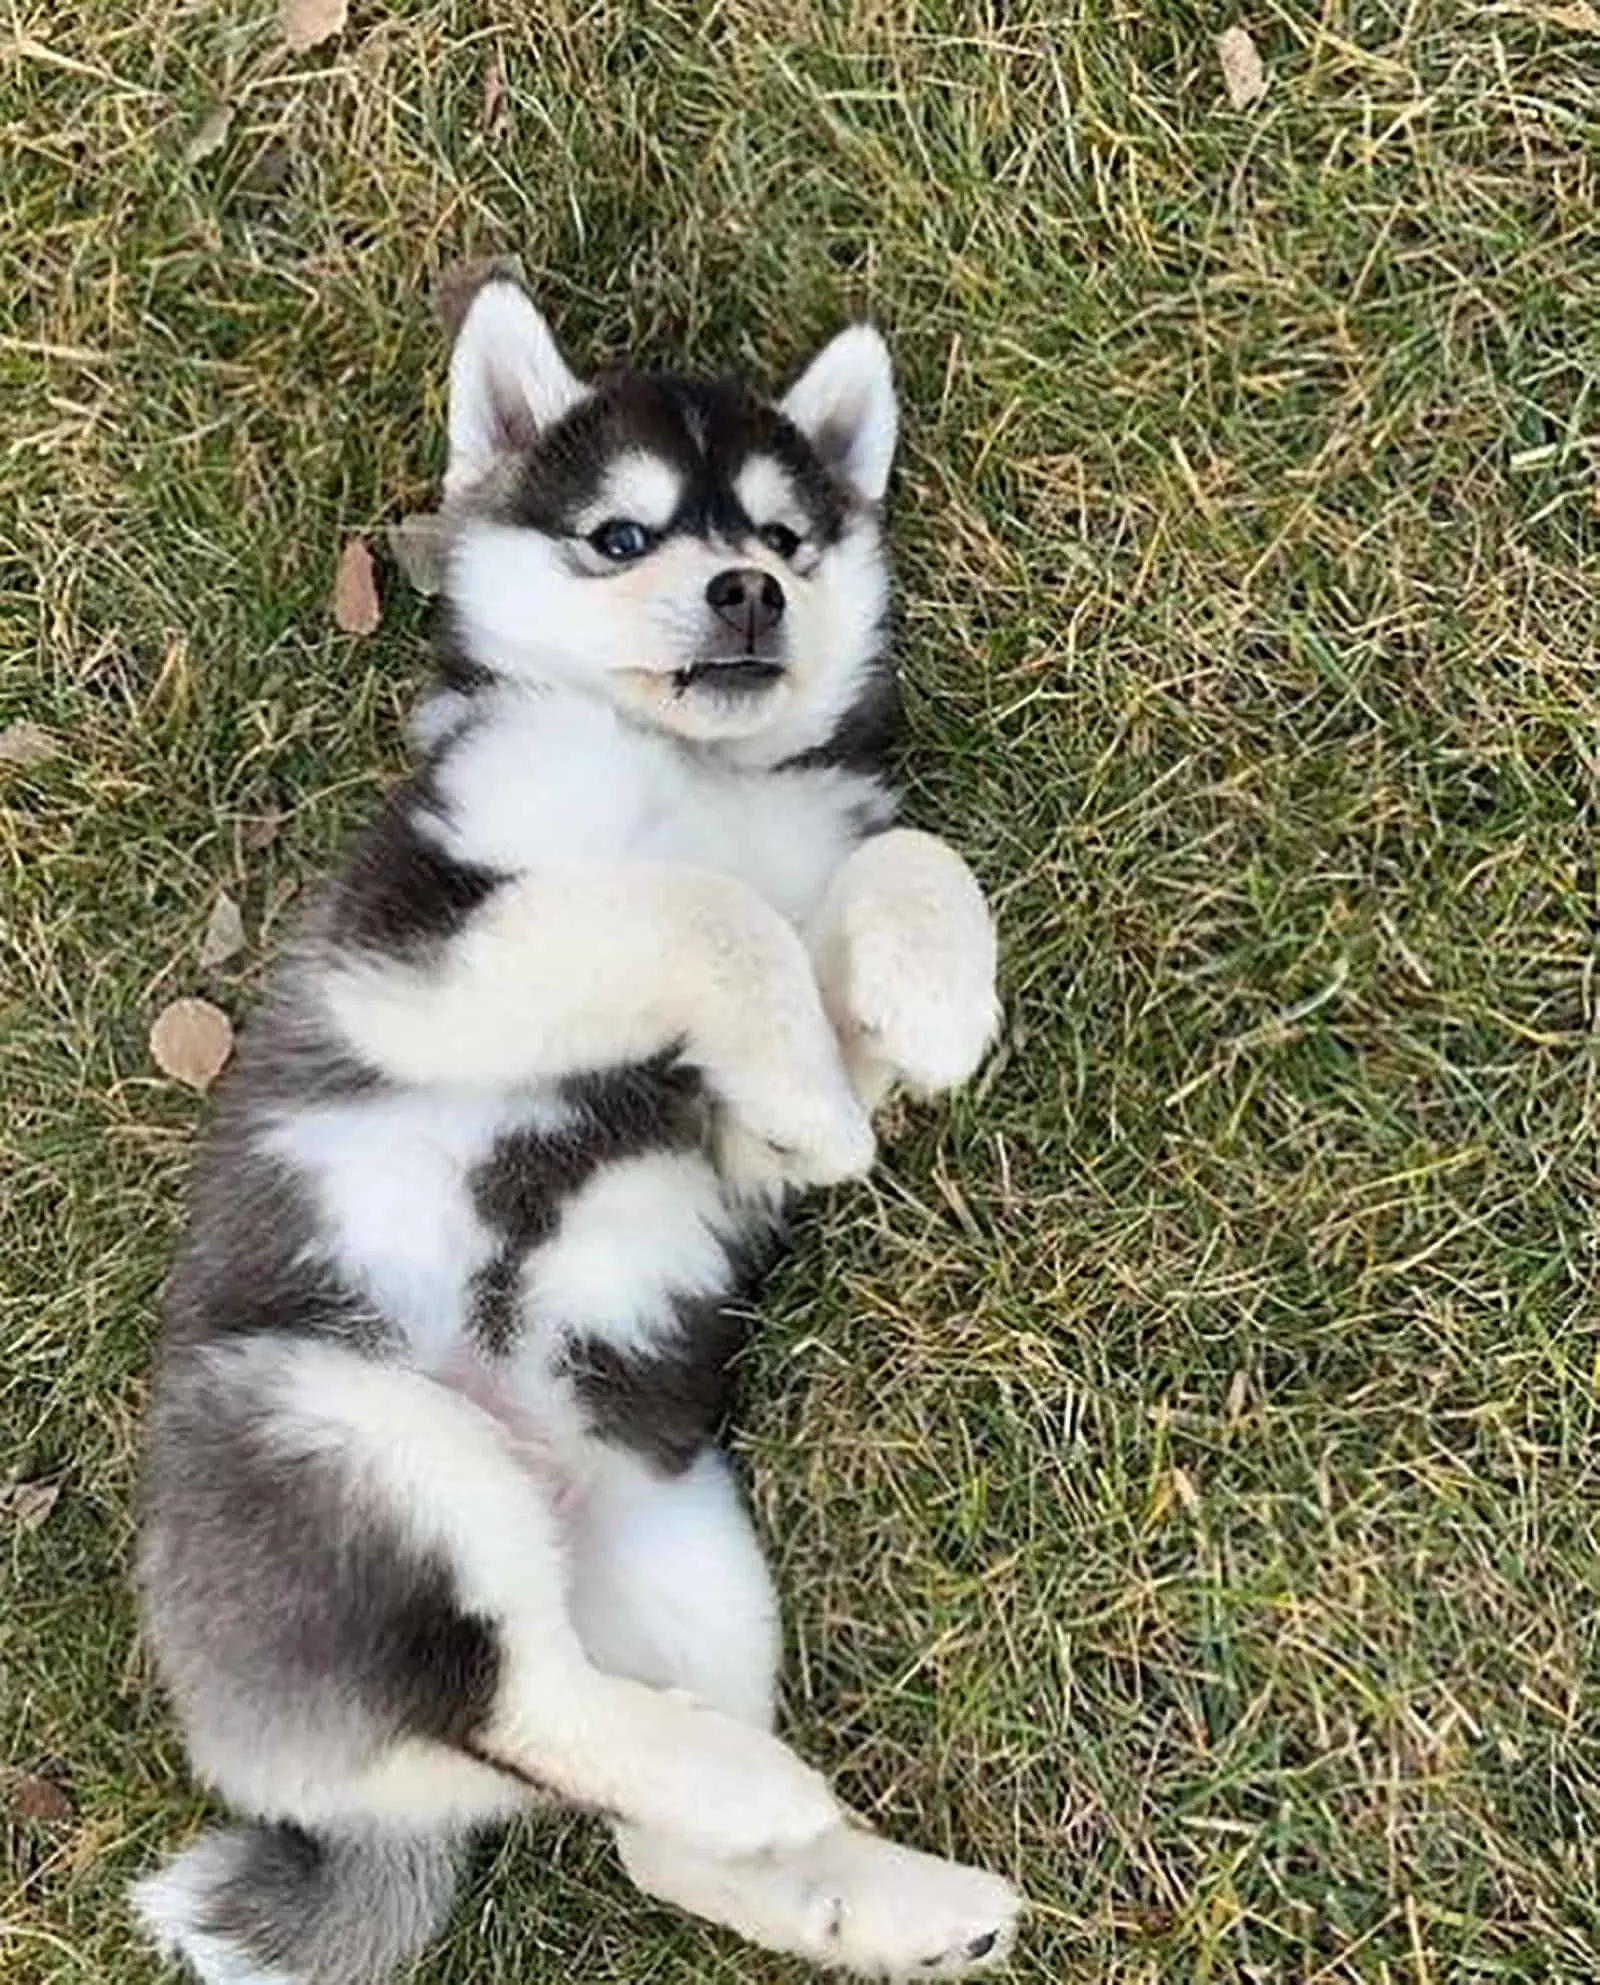 miniature husky puppy lying on the grass